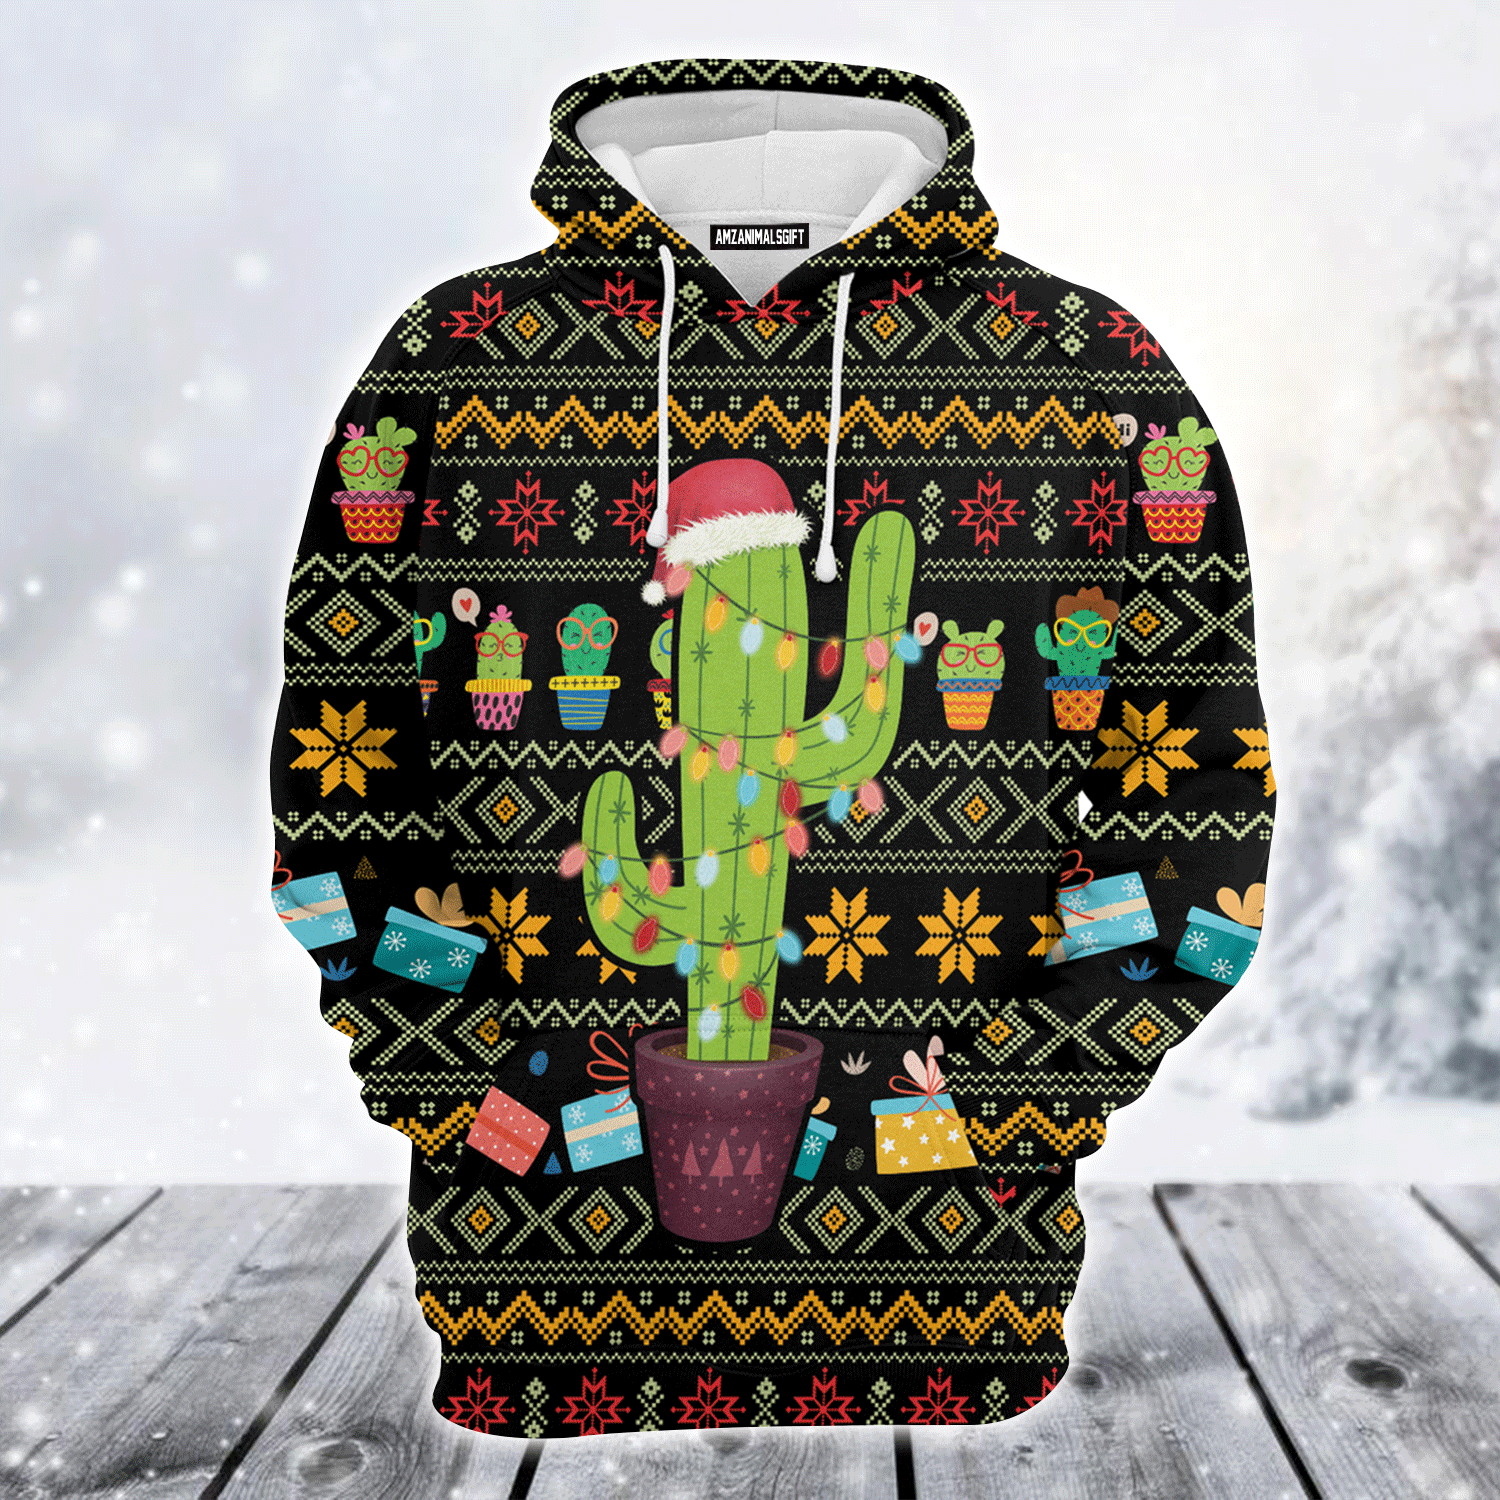 Cactus Premium Christmas Hoodie, Cactus Light Xmas Christmas Unisex Hoodie For Men & Women - Perfect Gift For Christmas, Friends, Family